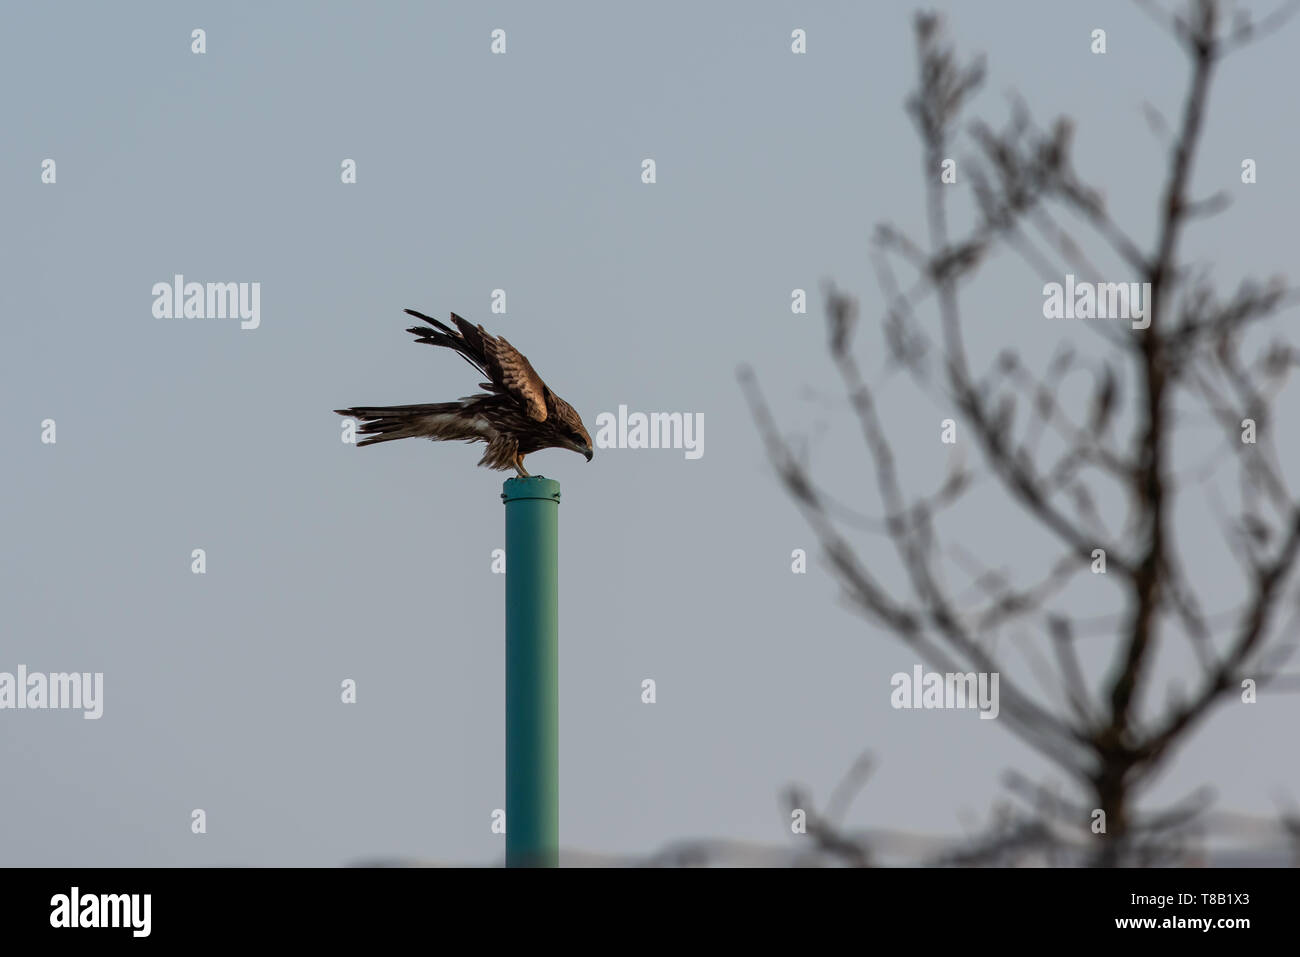 japanese golden eagle standing on a pole in Fukuoka, Japan Stock Photo